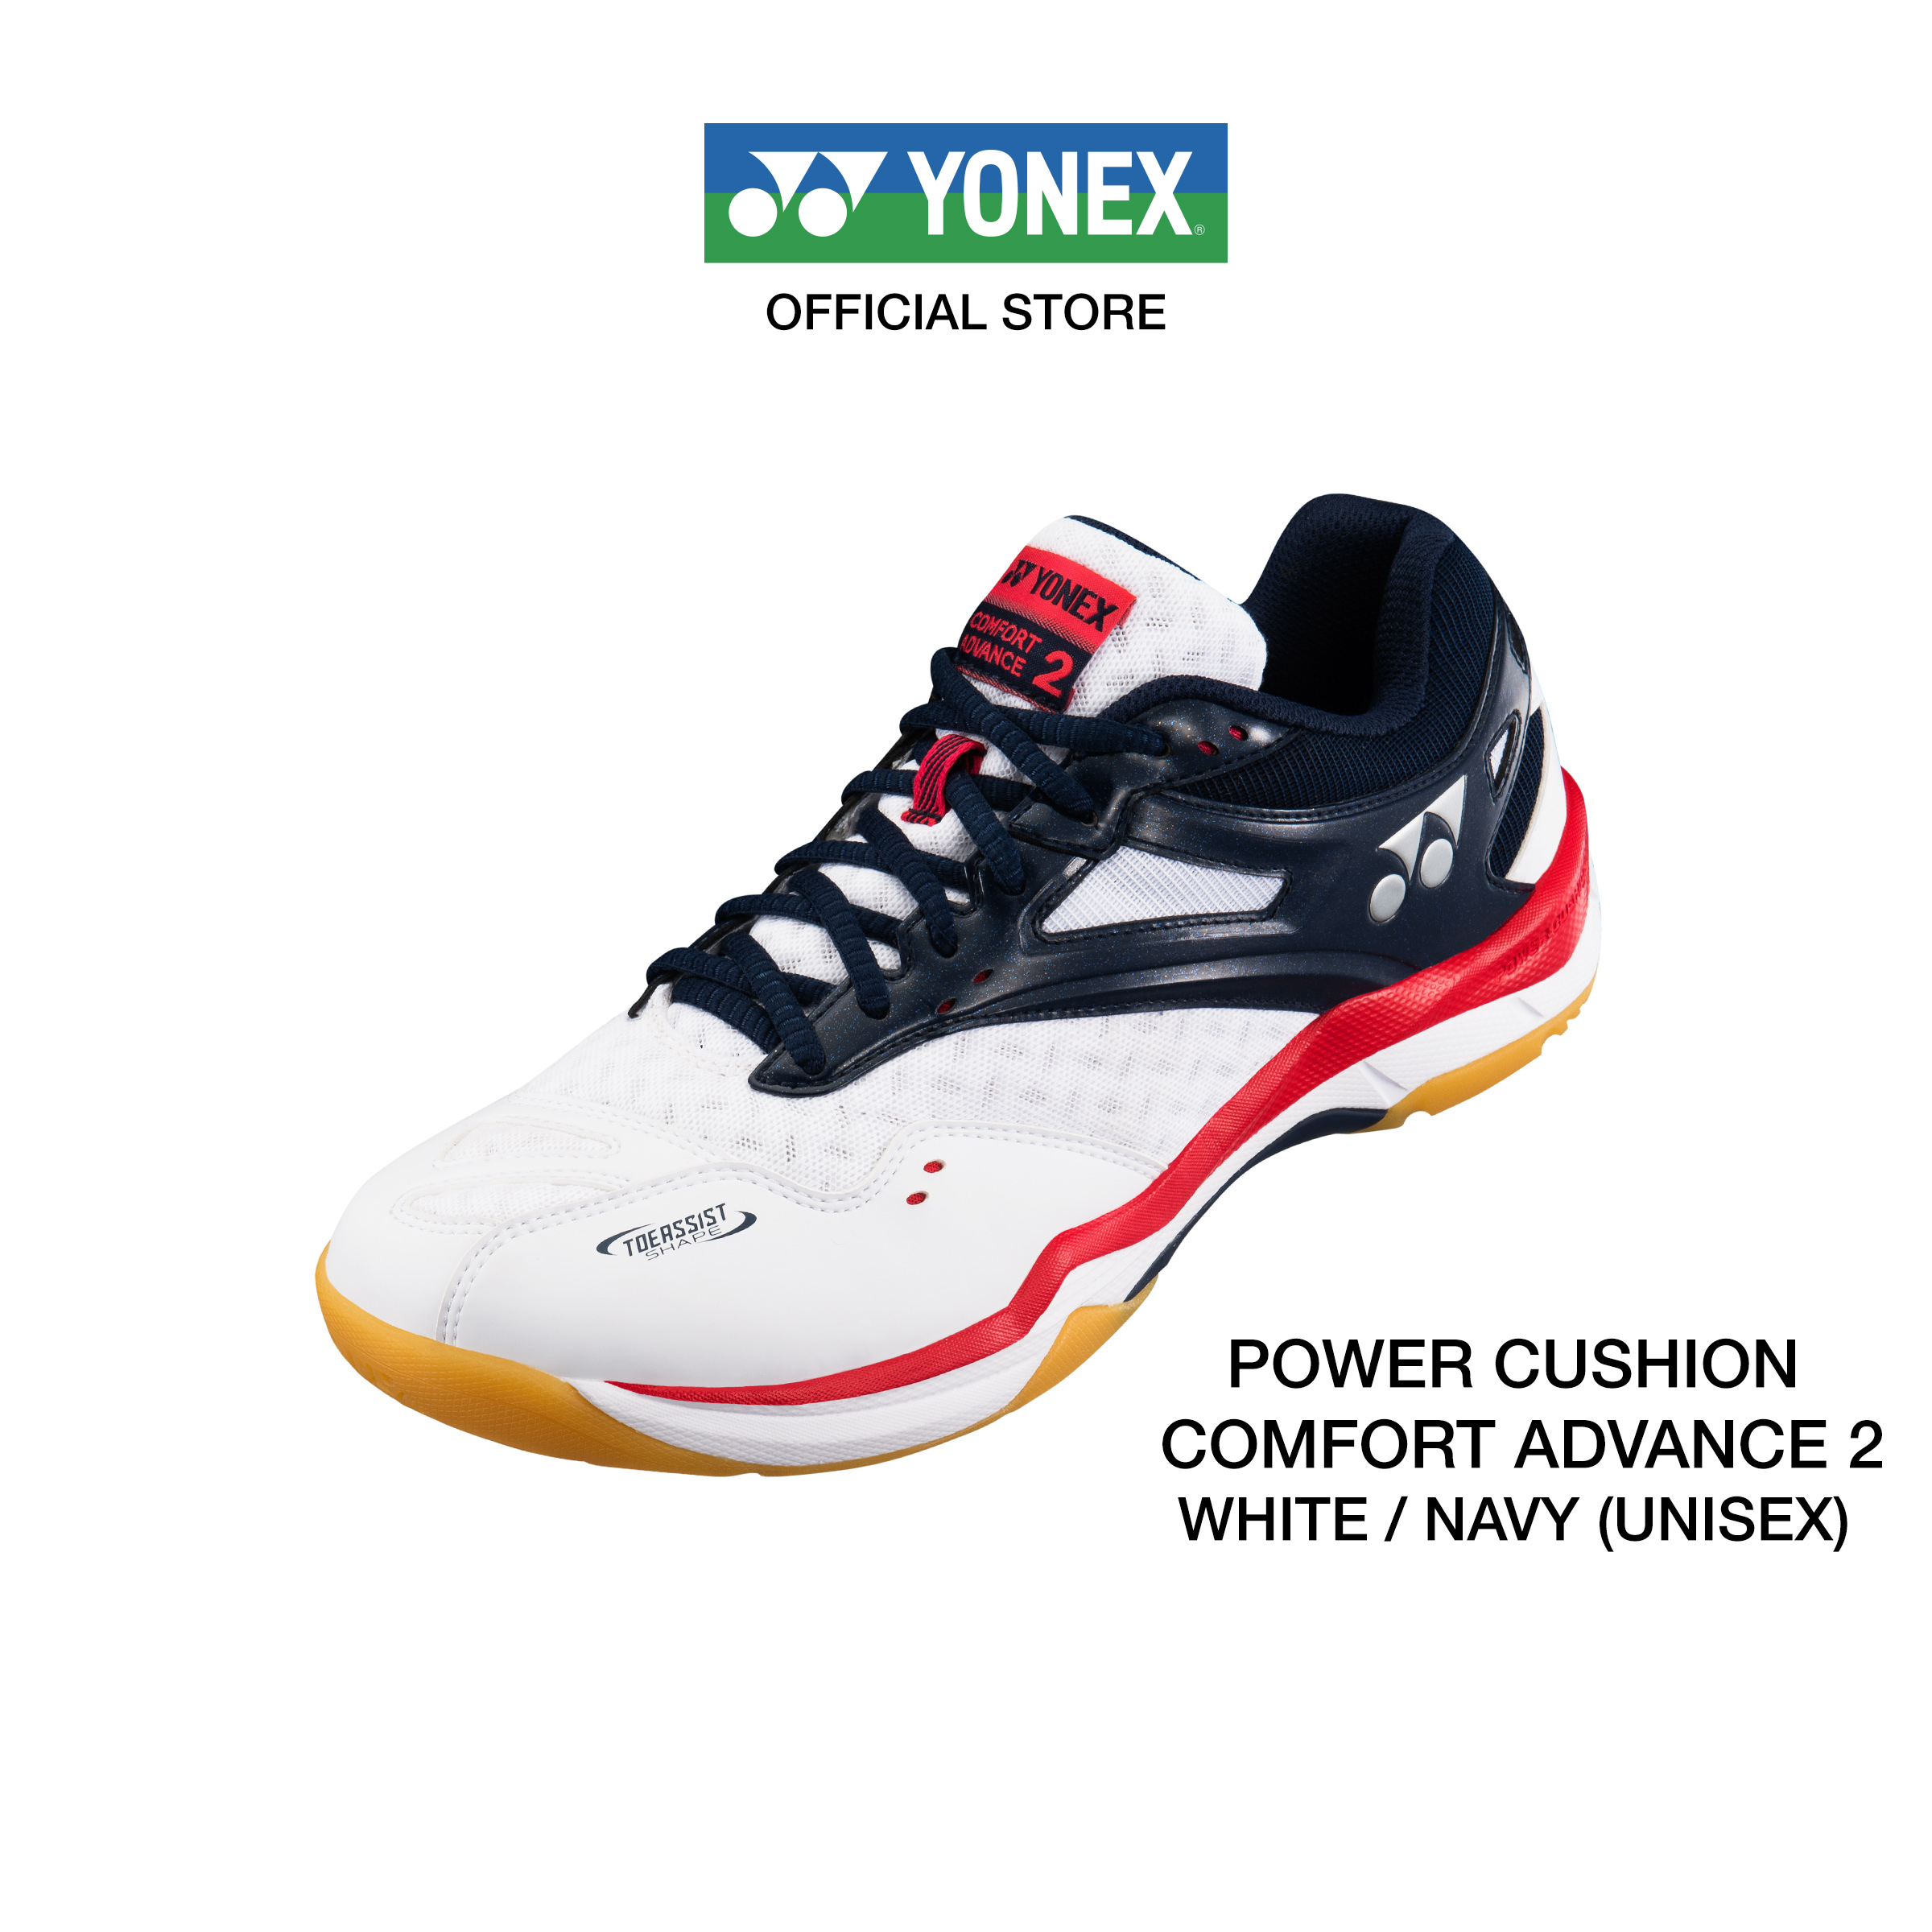 (SIZE US MEN) รองเท้าแบดมินตัน YONEX รุ่น POWER CUSHION COMFORT ADVANCE 2 (SHBCFA2) รองเท้าสำหรับผู้เริ่มต้นเล่นแบดมินตัน ต้องการรองเท้าที่ให้ความรู้สึกนุ่มสบาย